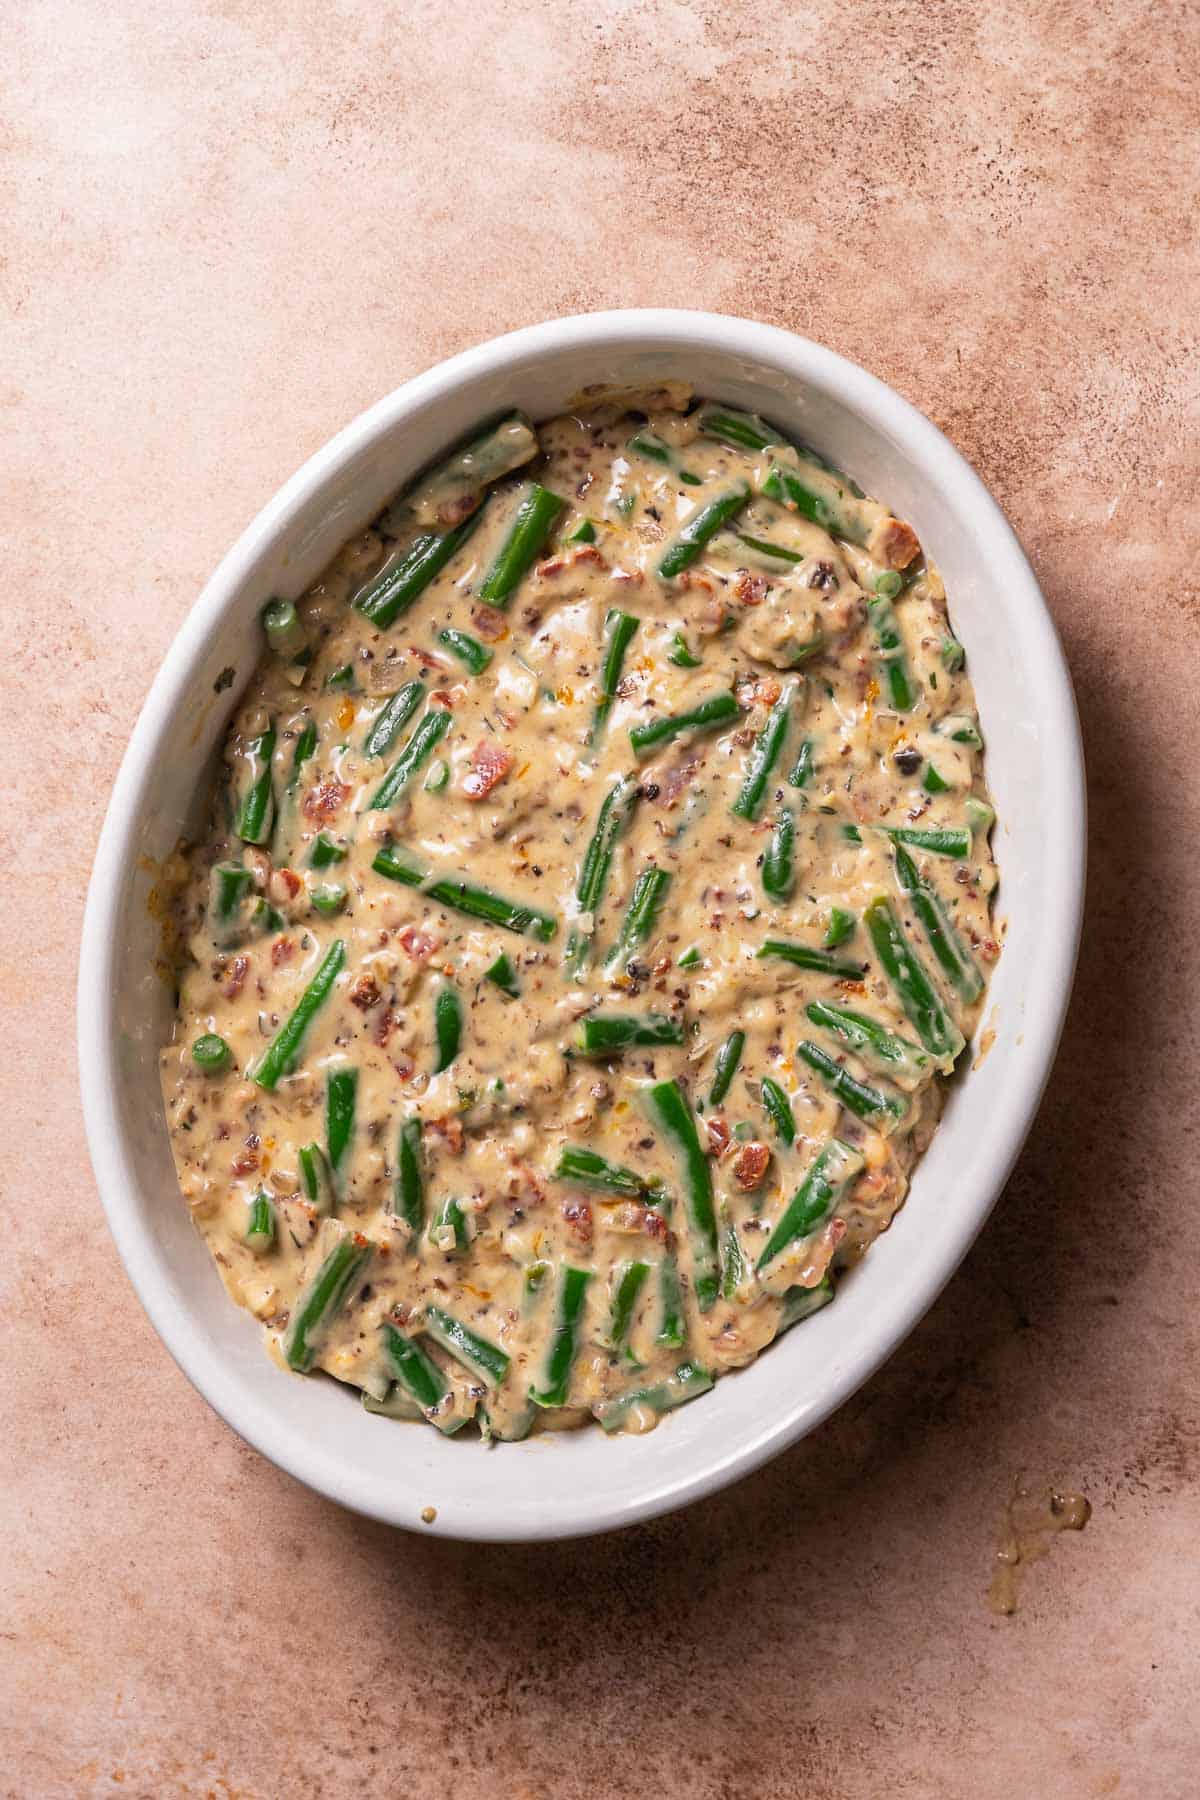 Cheesy green bean casserole in a white baking dish before baking.